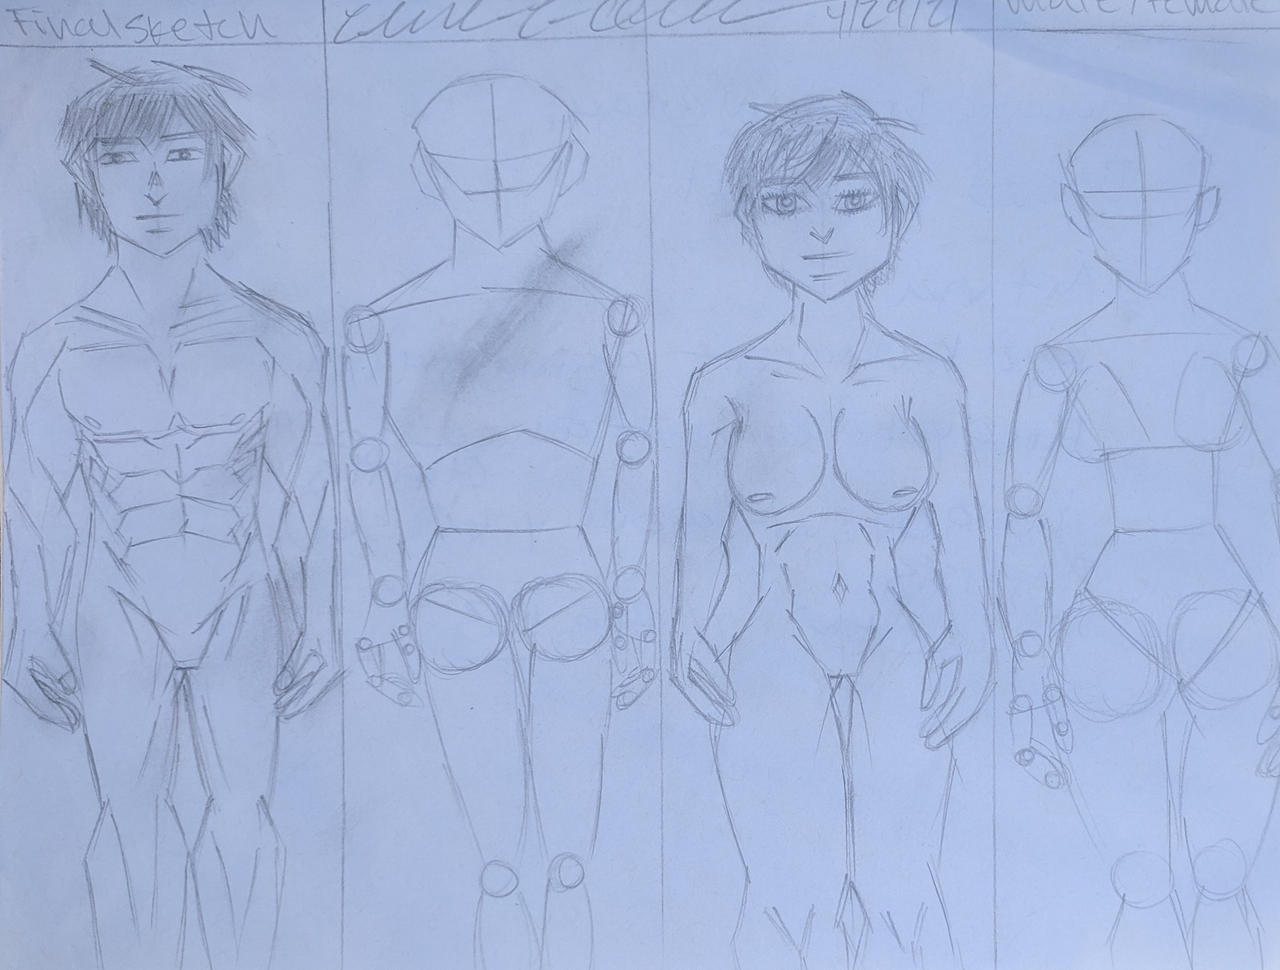 Male anatomy doodles and such - - - #Manga #mangaart #mangasketch